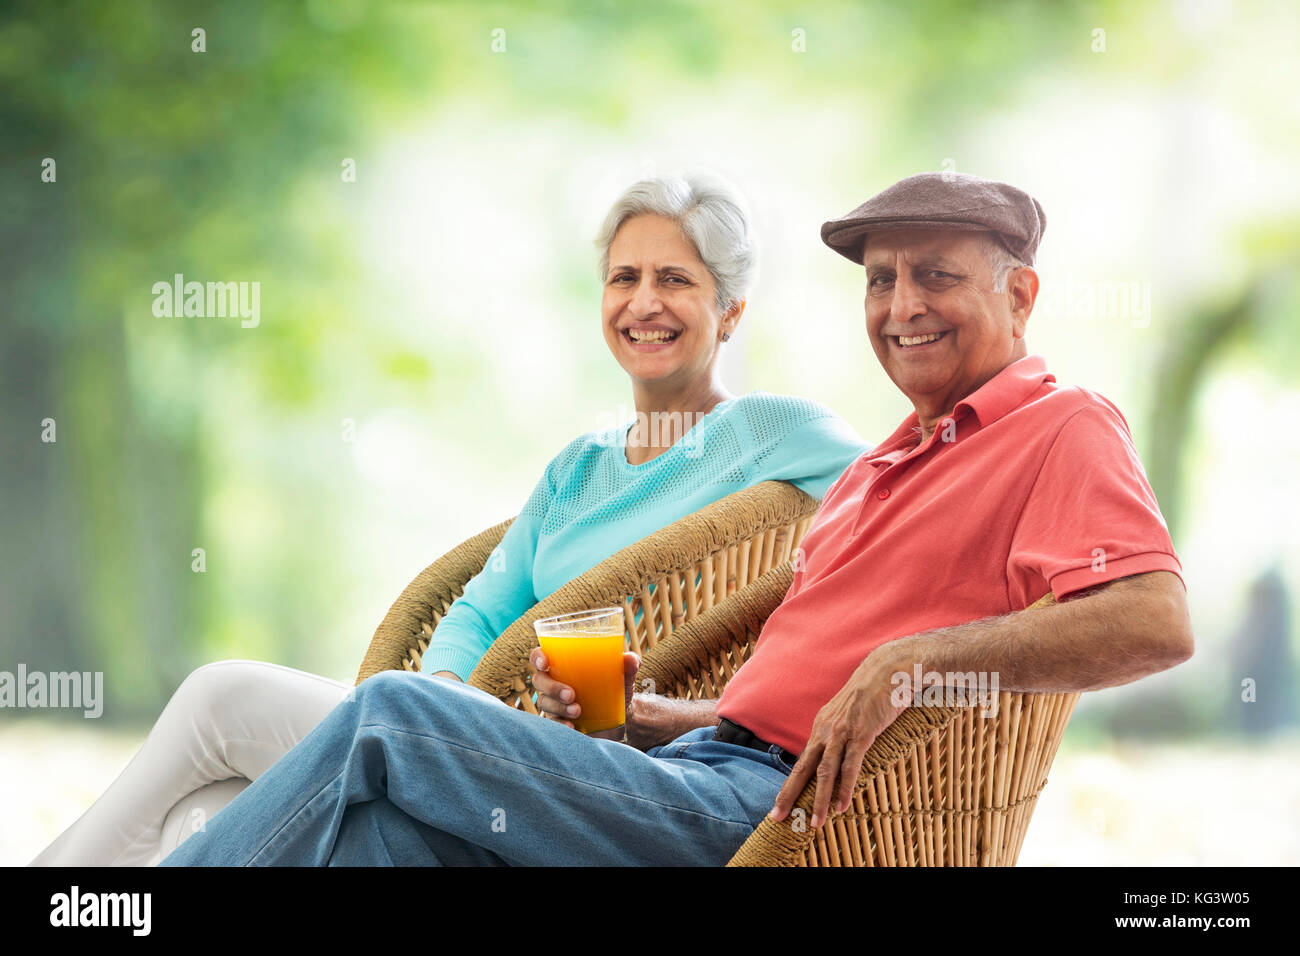 Senior couple sitting outdoors on wicker chair Stock Photo